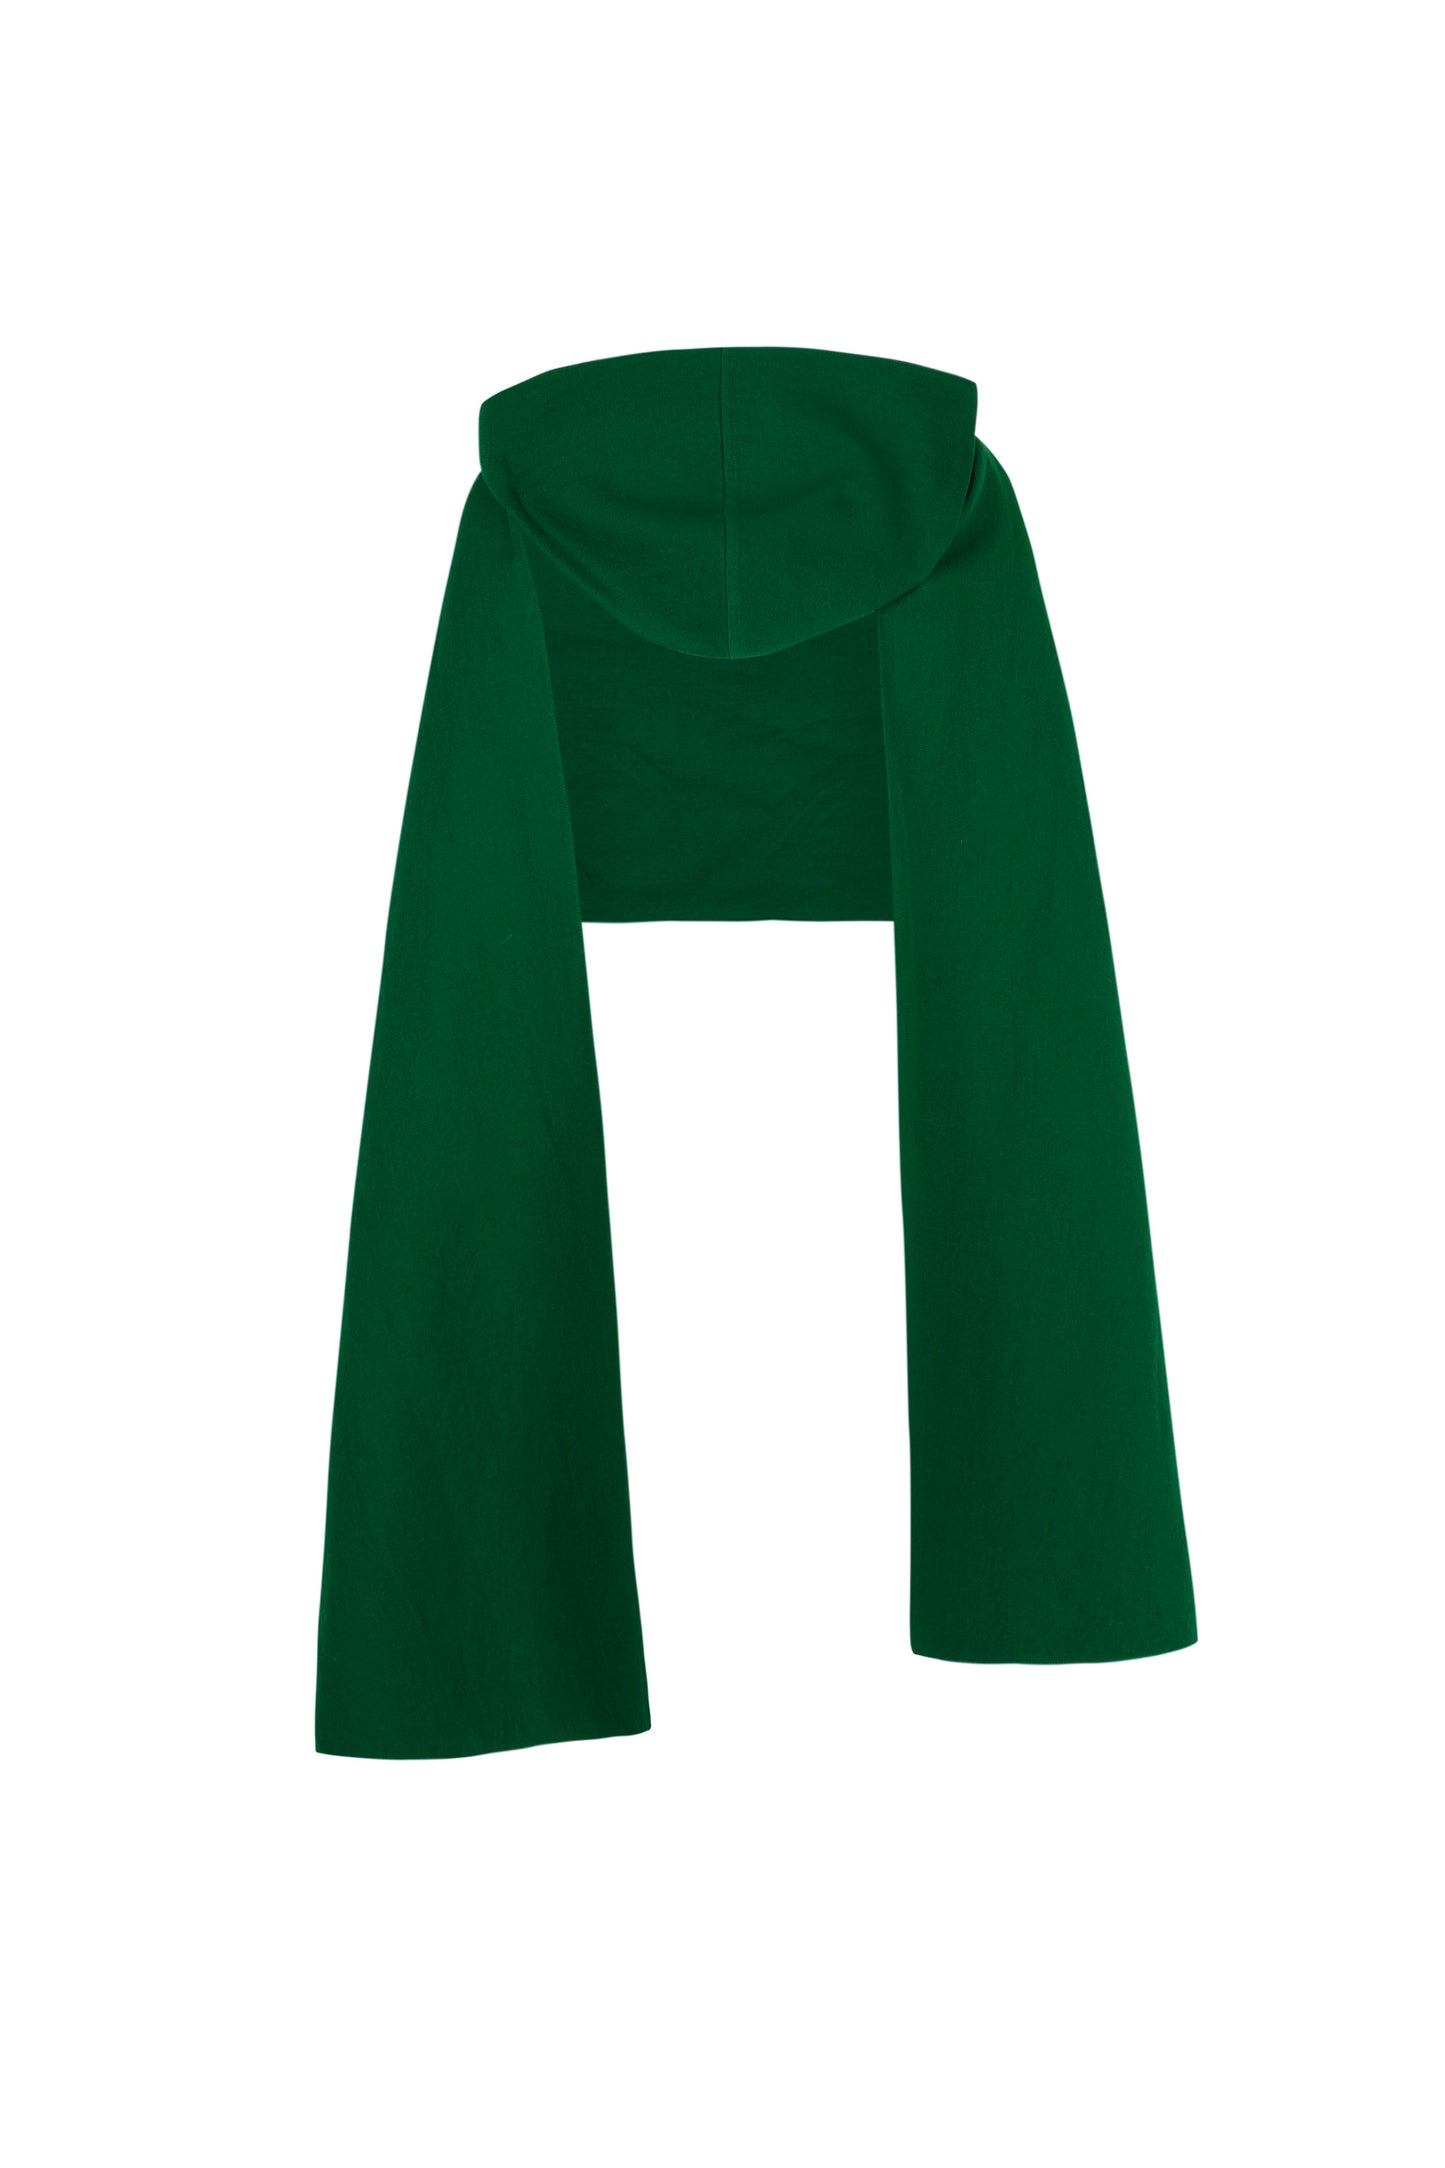 Vienna, scarf in emerald green linen and virgin wool